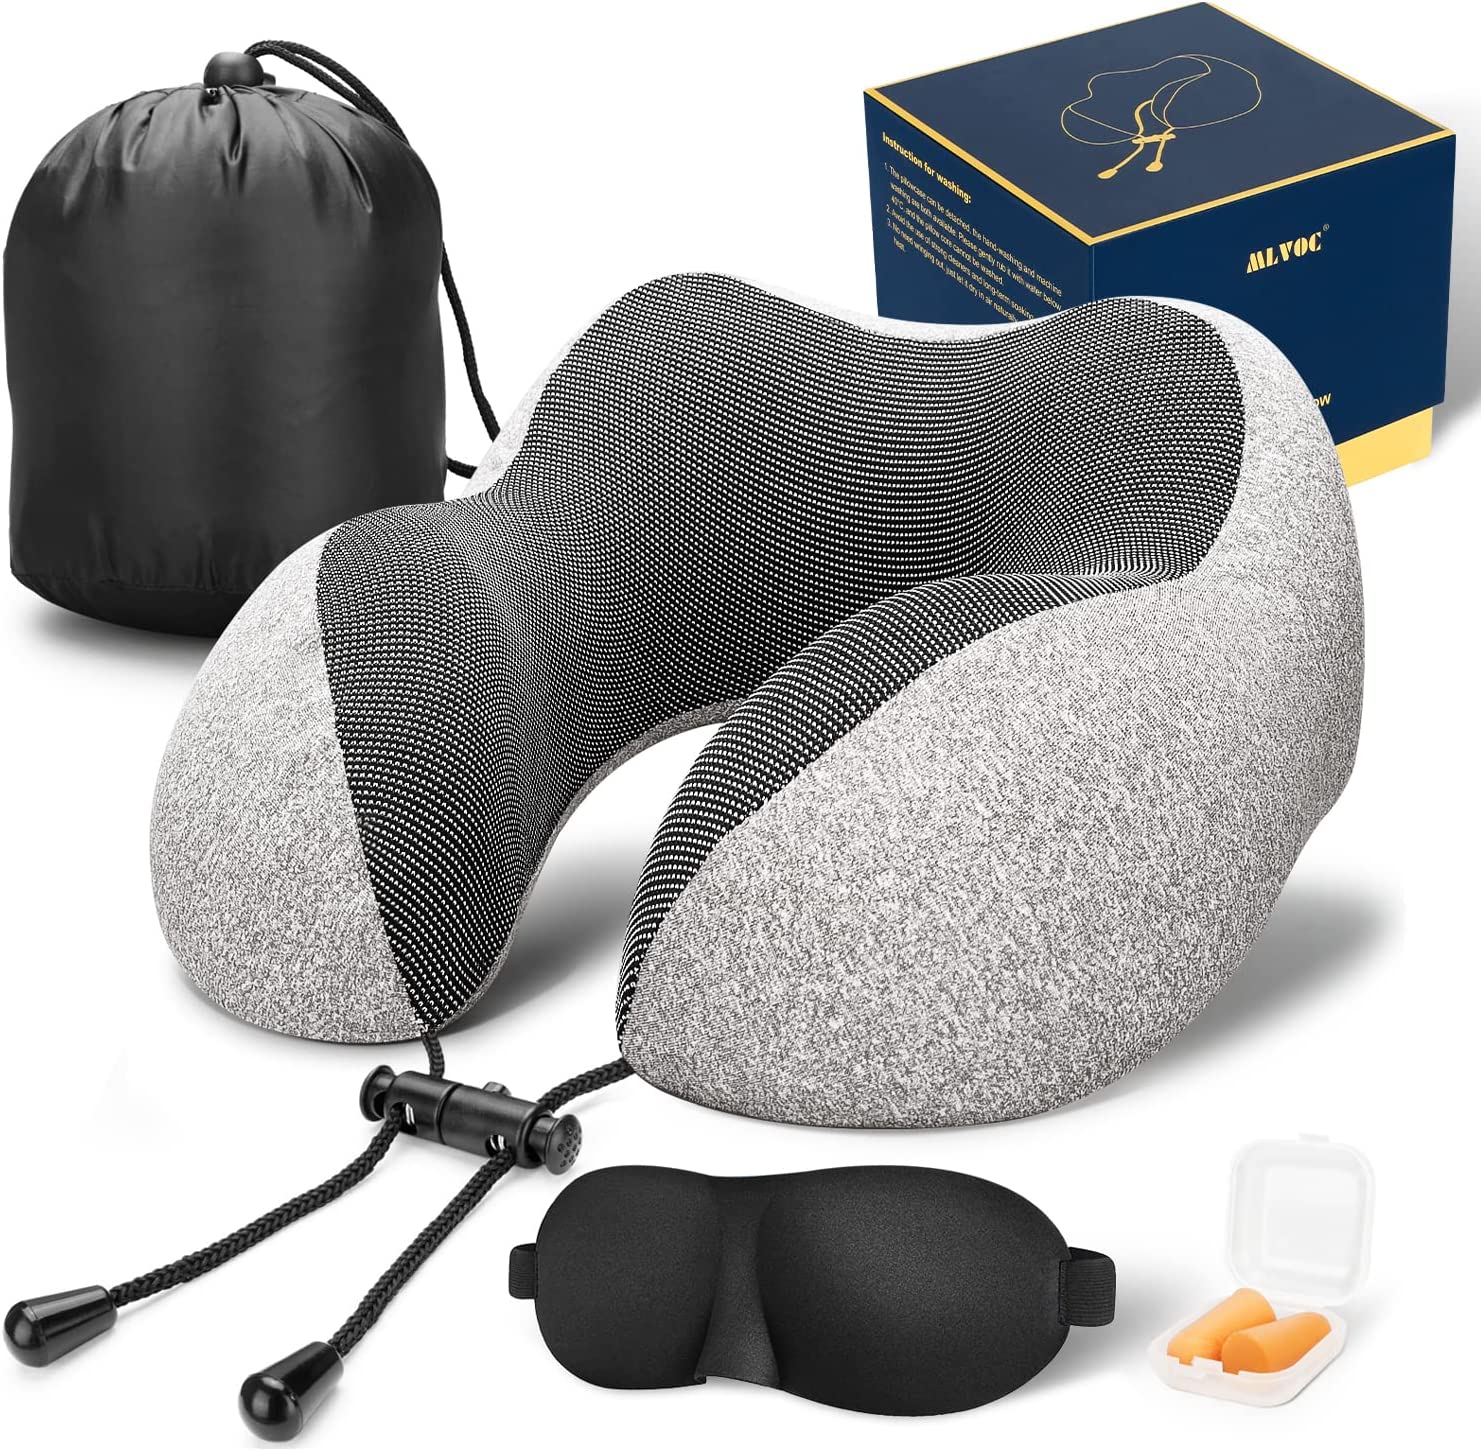 MLVOC Sweat-Resistant Support Travel Pillow